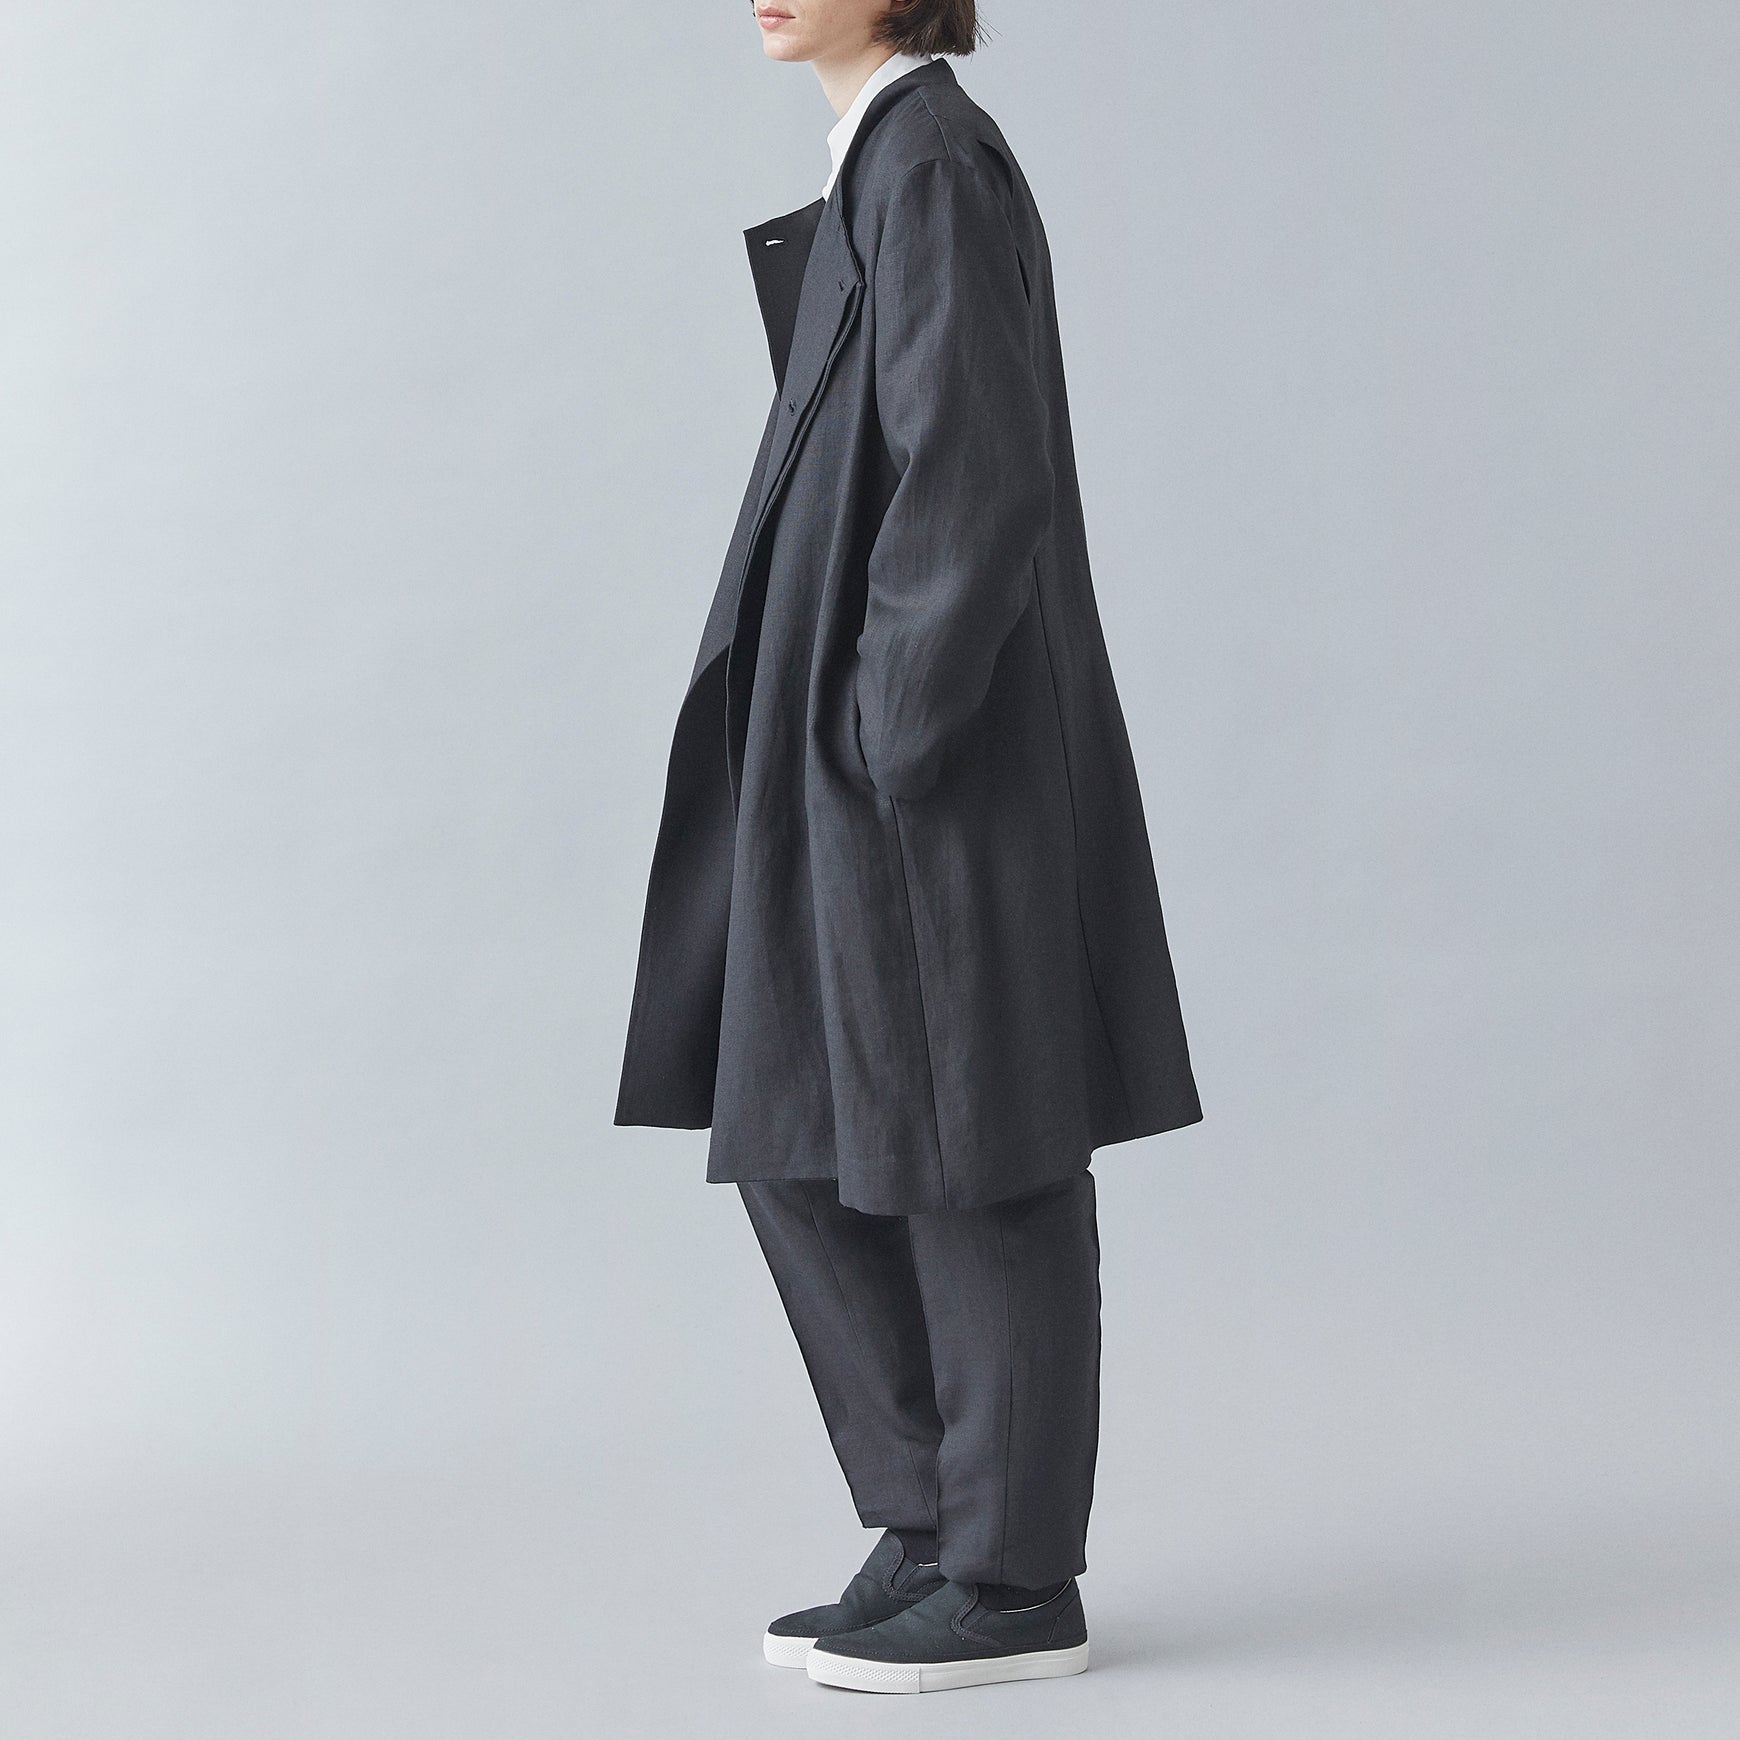 Atelier Coat (Black)